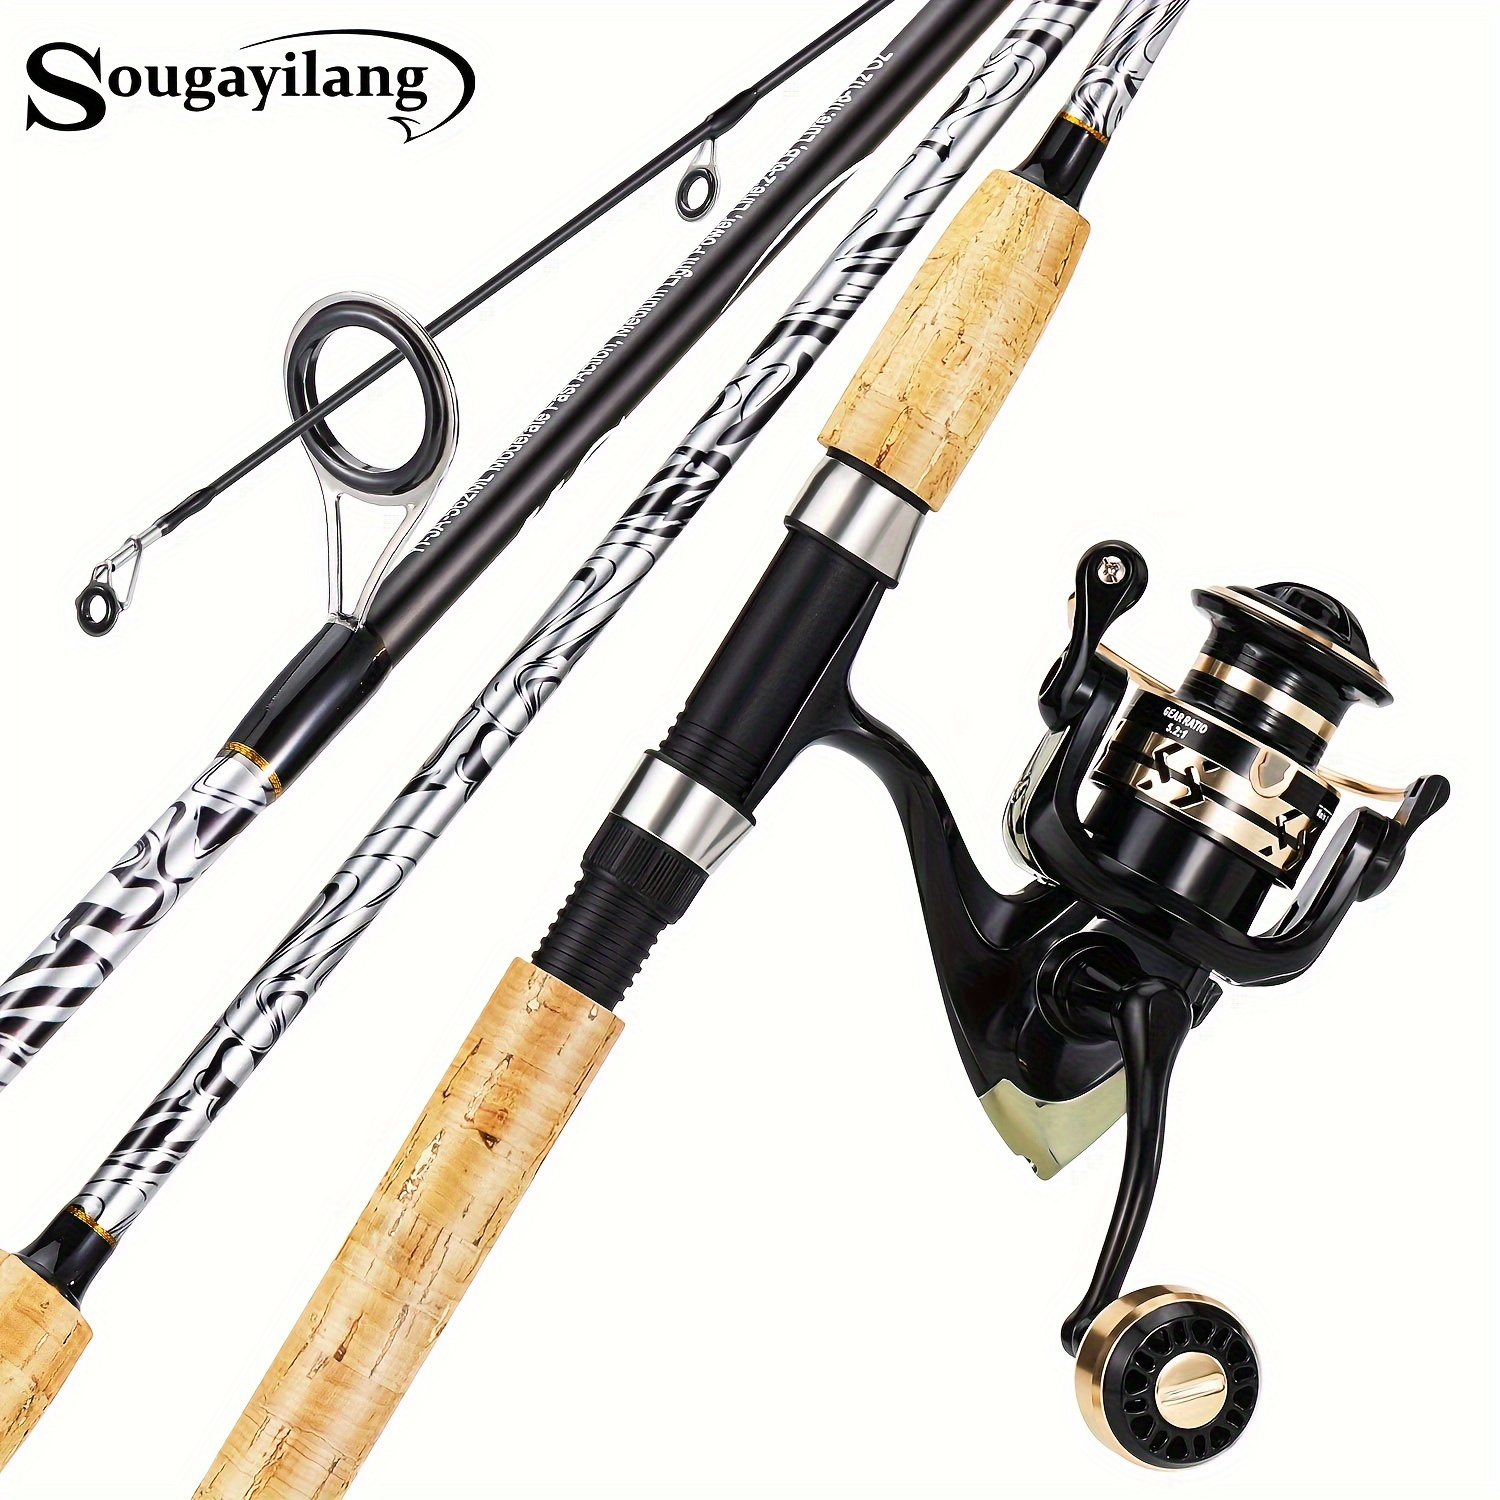 5.9ft Telescopic Casting Fishing Combo Portable Ultralight Rod And 5.1:1  Gear Ratio Fishing Reel Fishing Tackle Kit